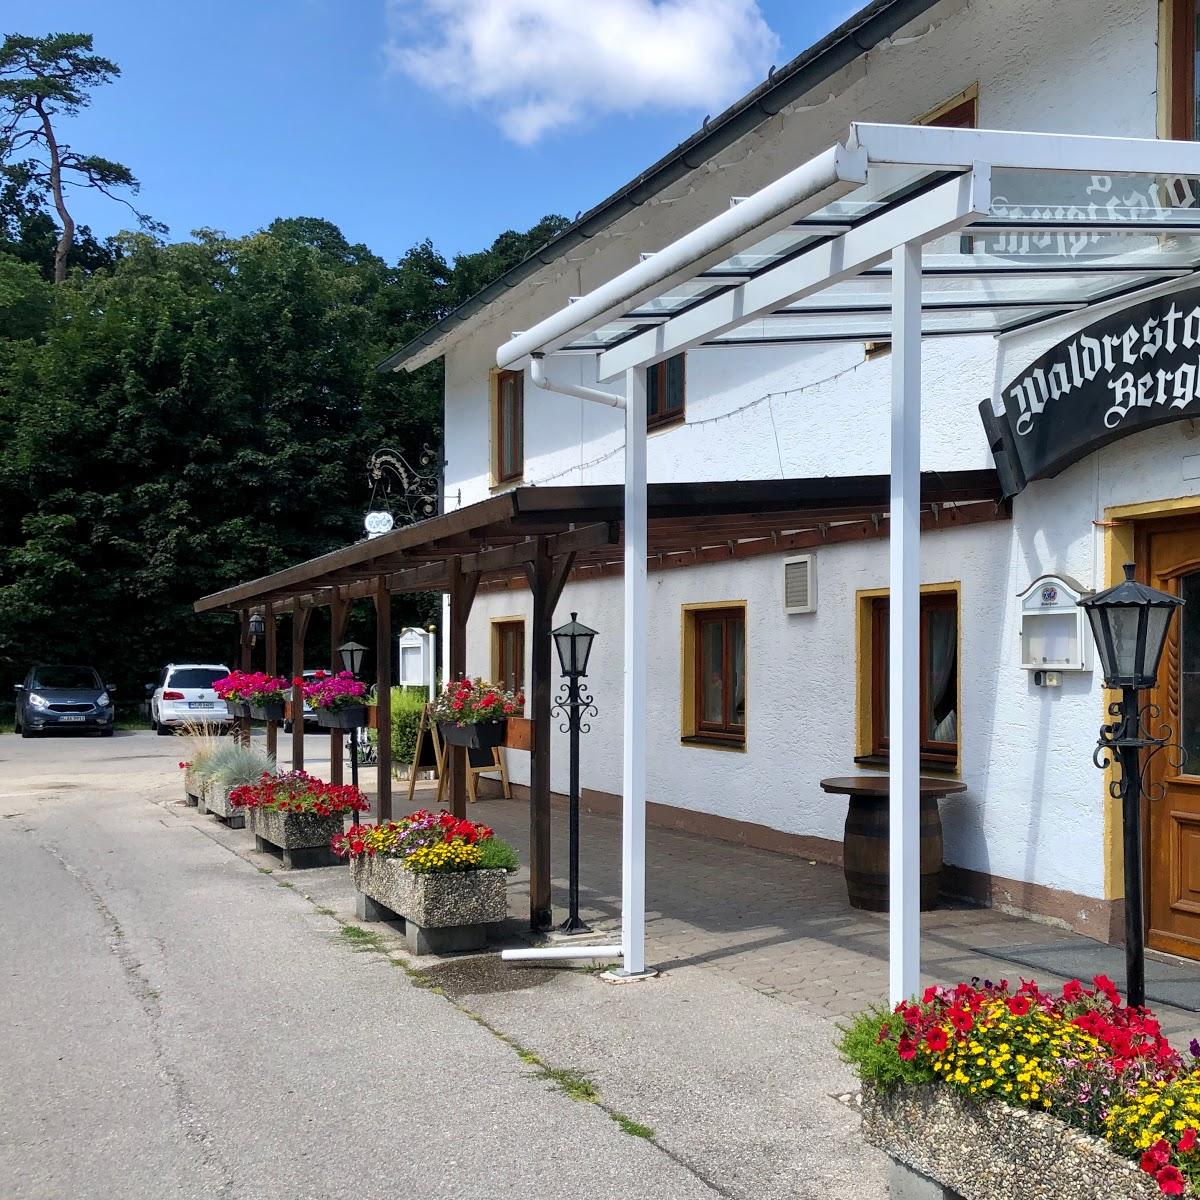 Restaurant "Restaurant Bergl" in  Oberschleißheim